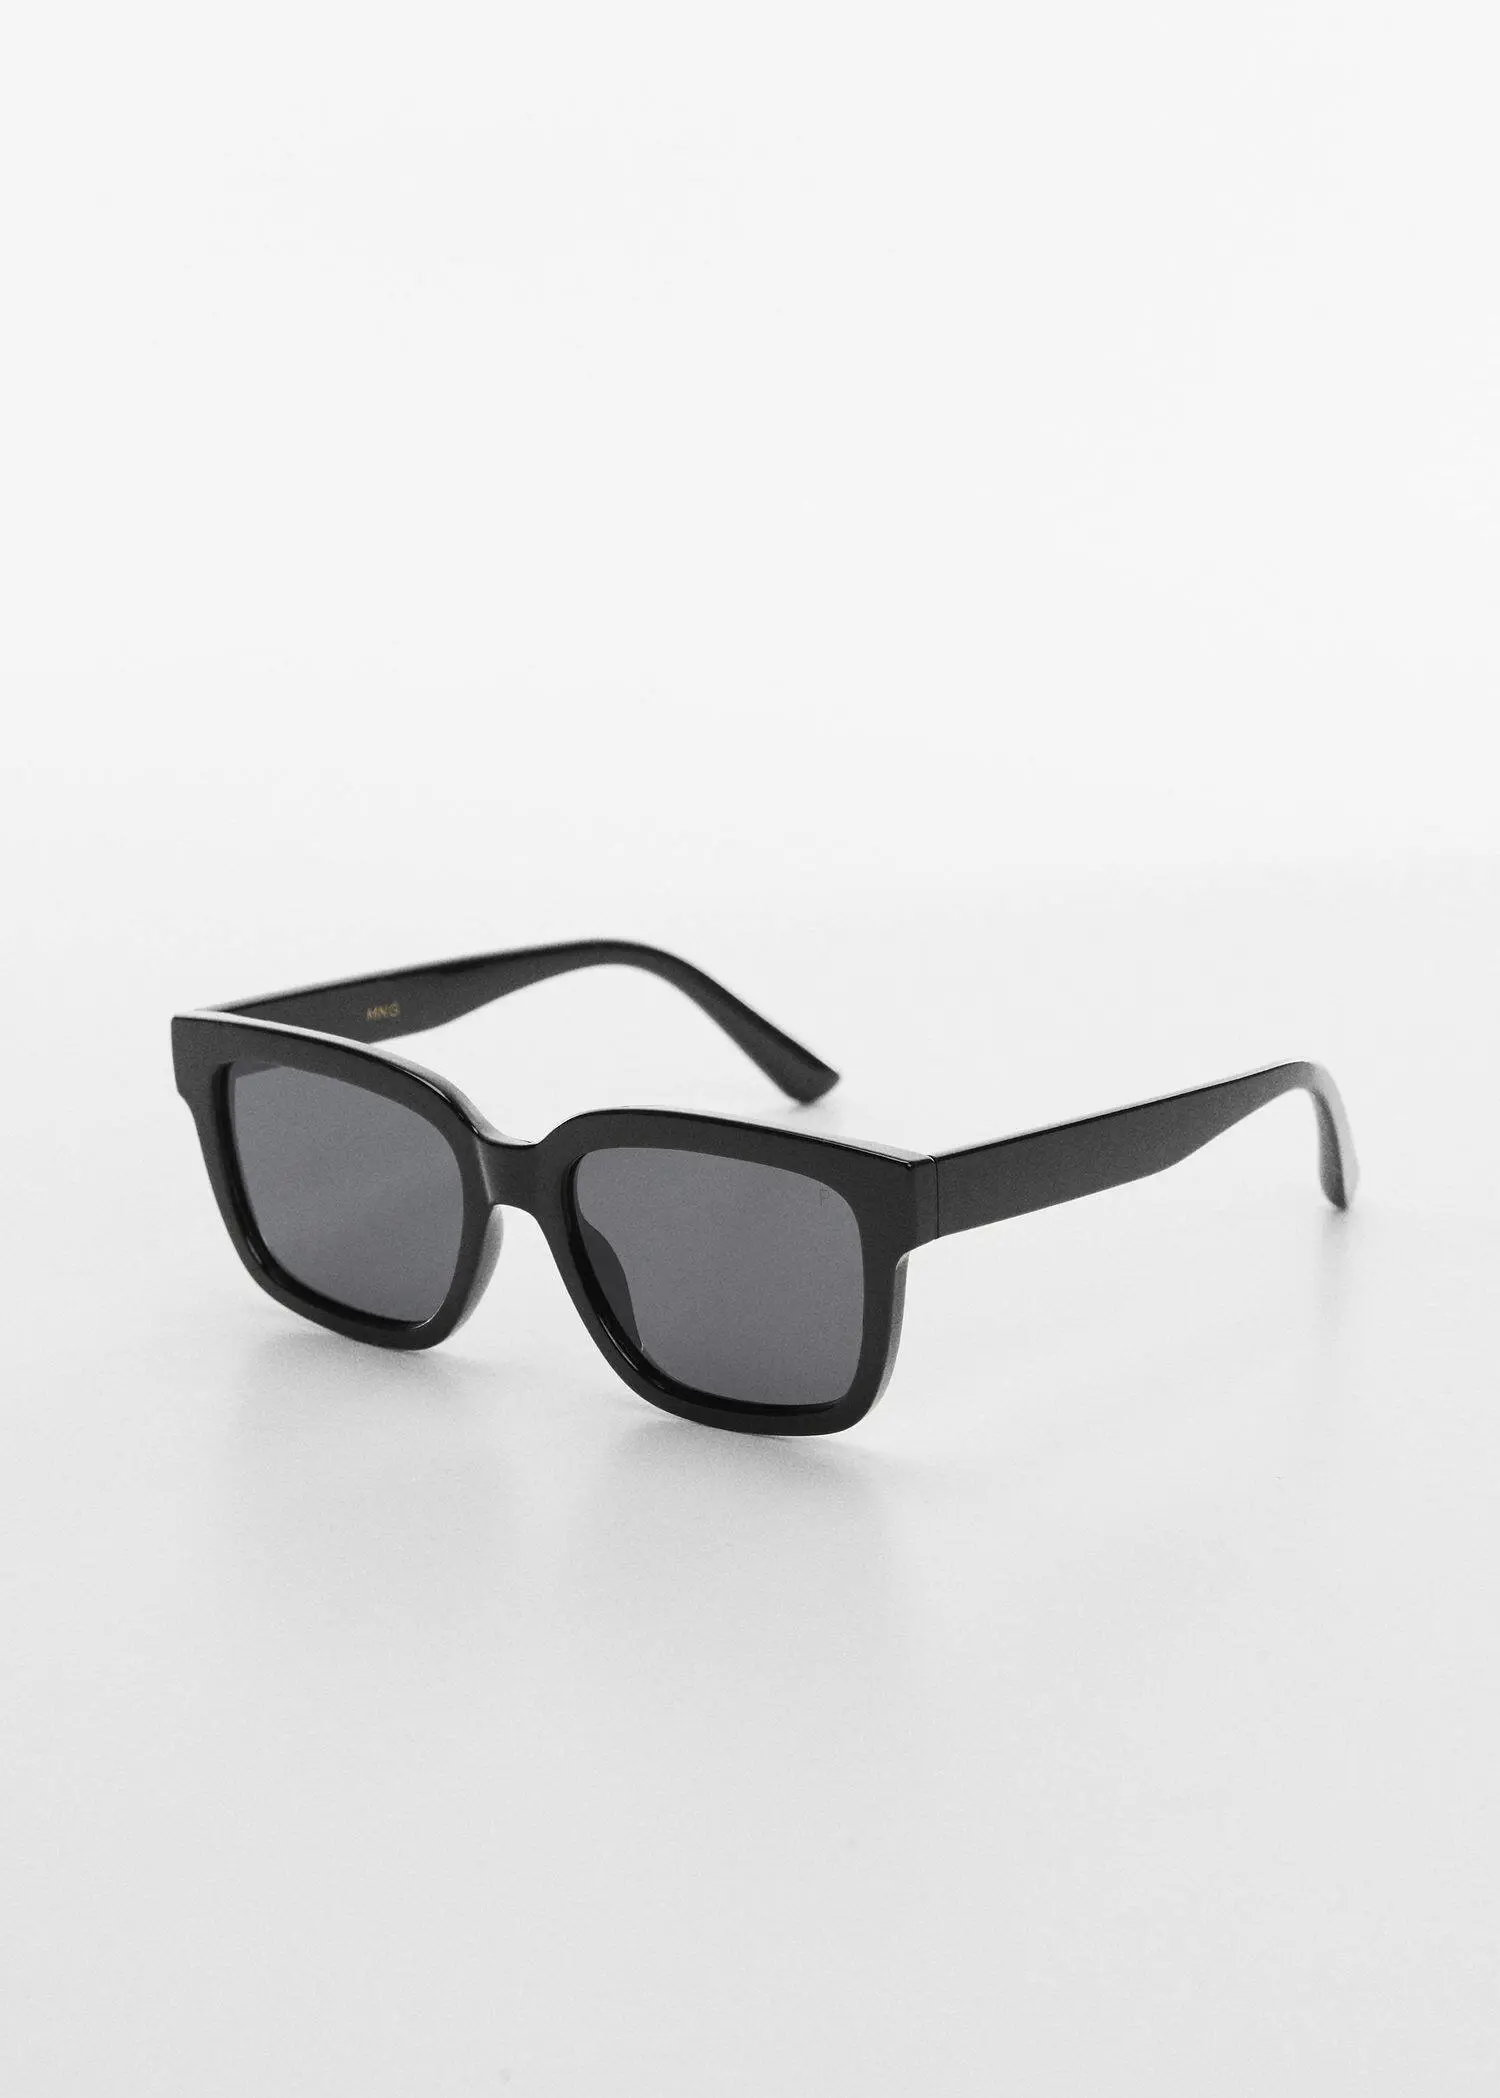 Mango Polarised sunglasses. a pair of sunglasses on a white surface. 